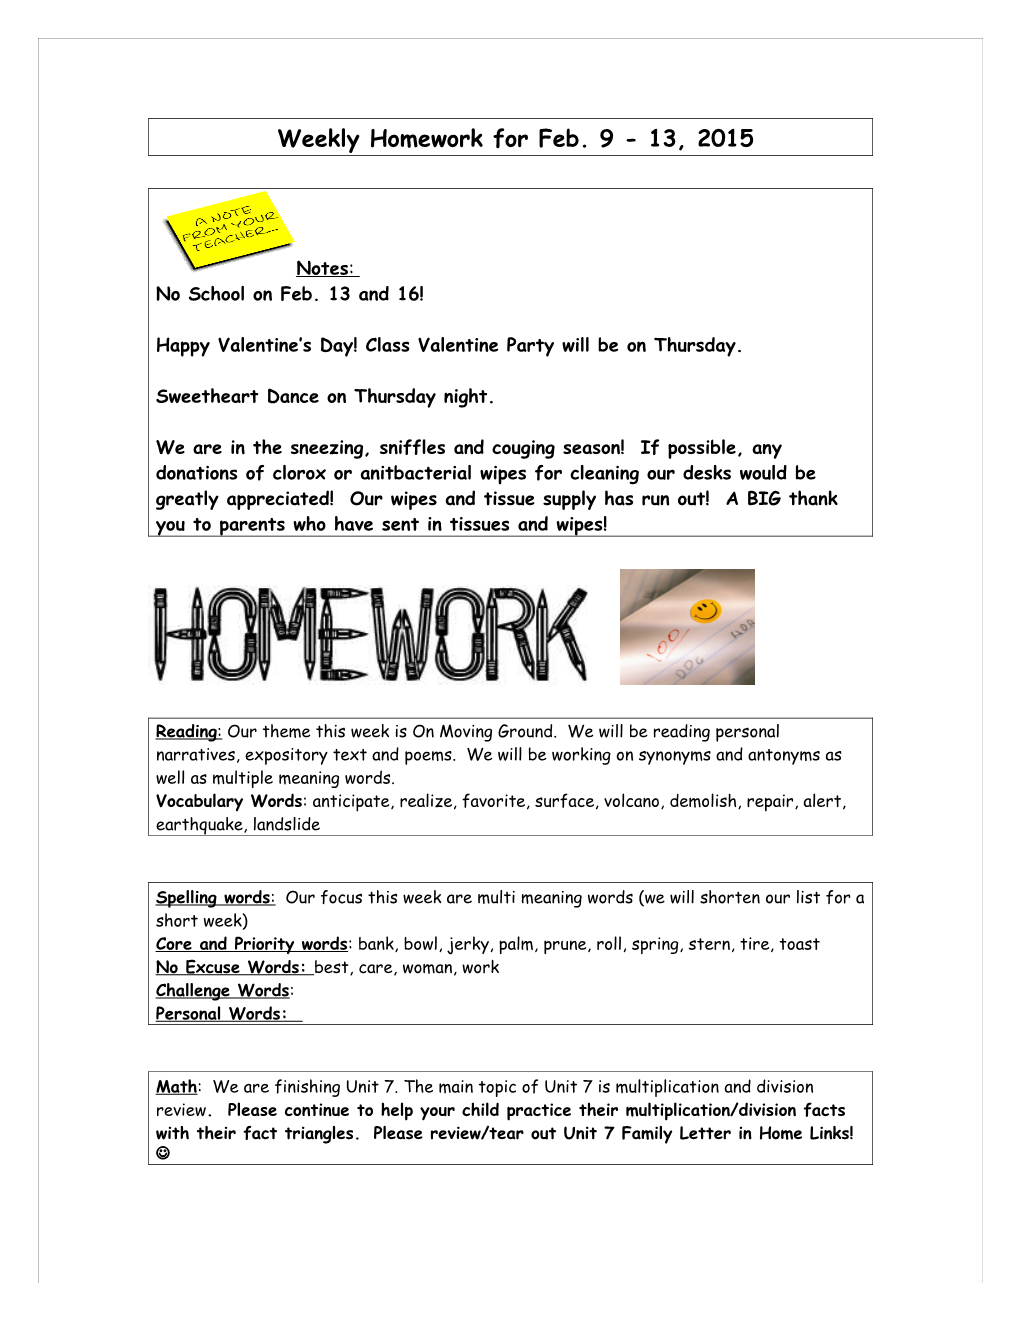 Weekly Homework for January 21 - 25, 2013